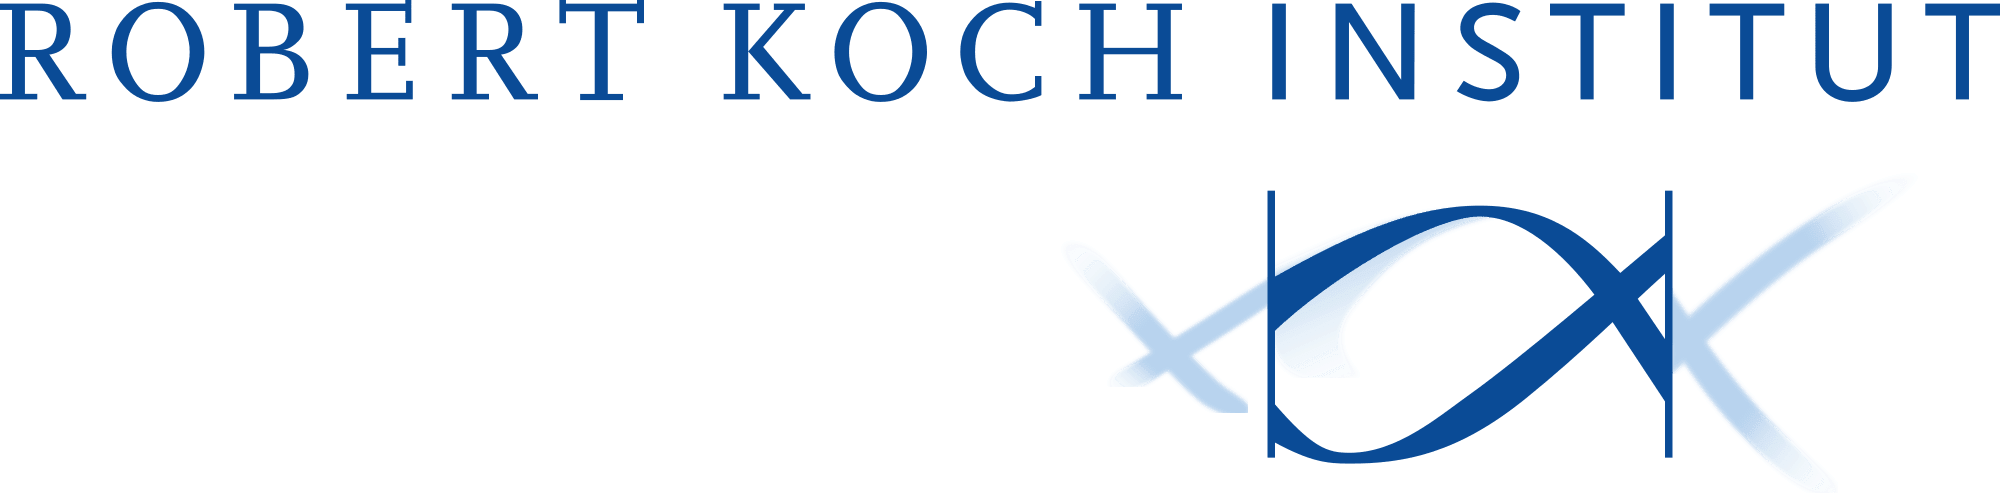 Robert Koch Institut logo